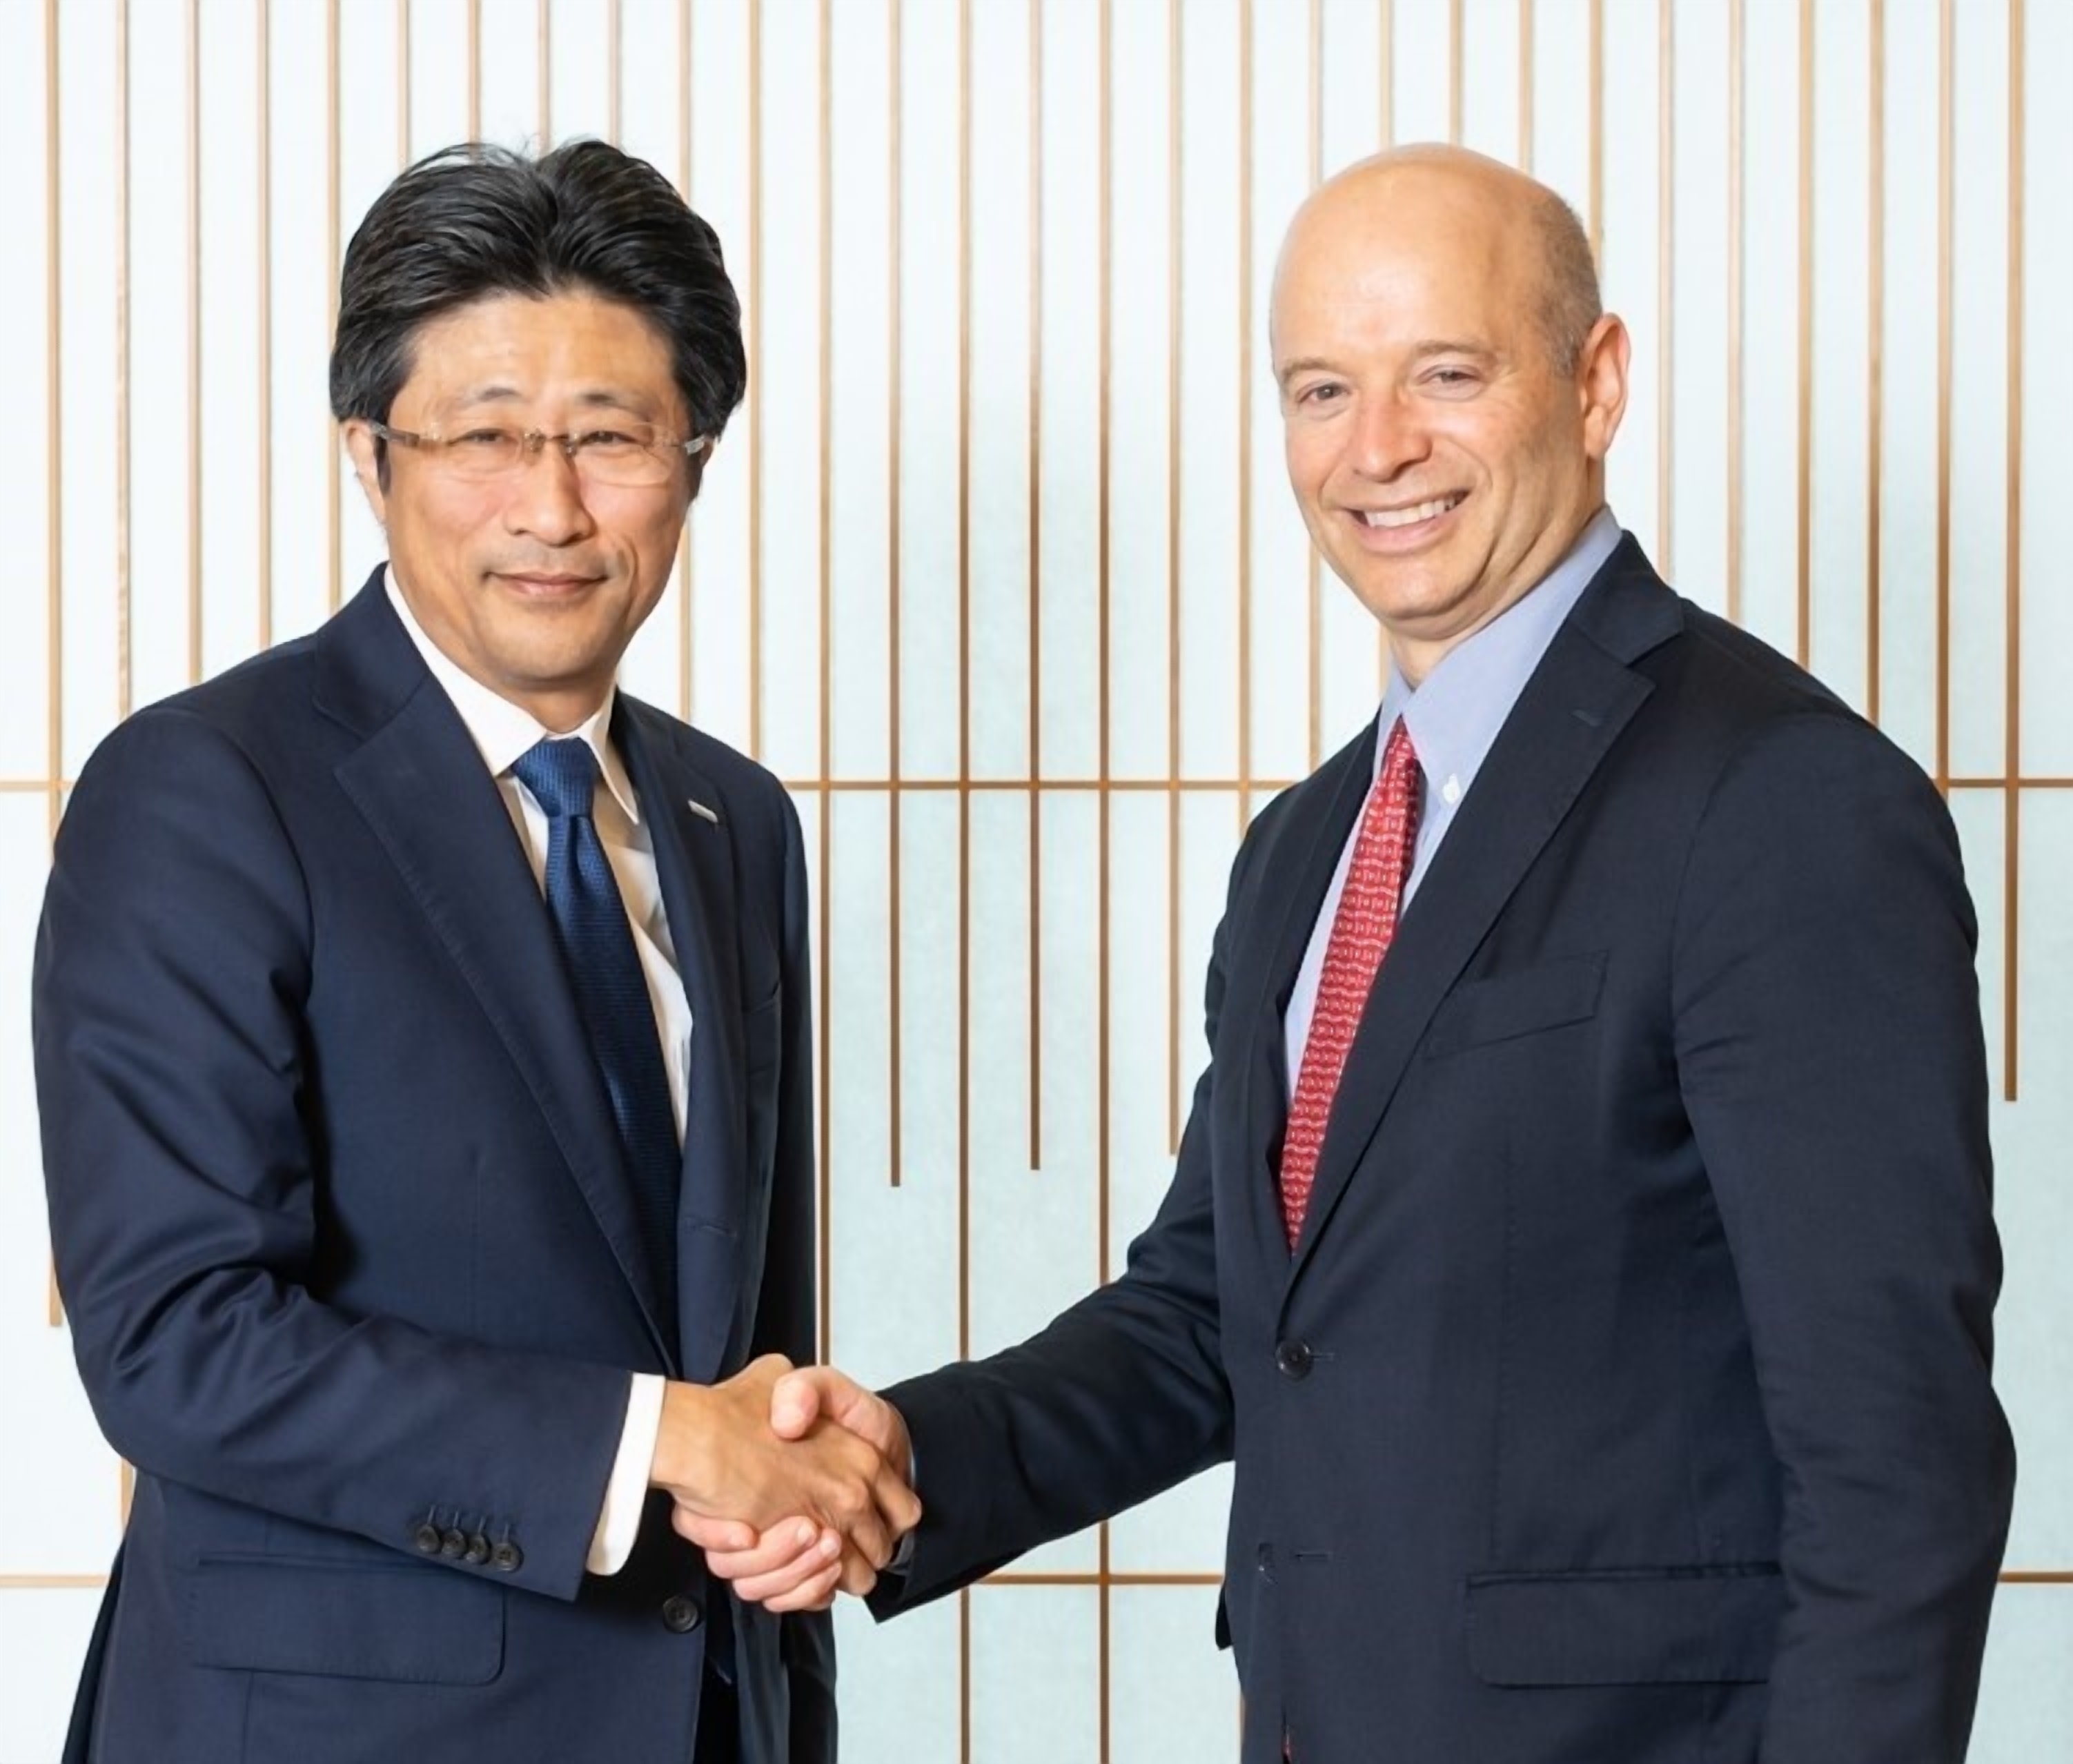 Mizuho, LSEG Partner to Grow Carbon Credit Market